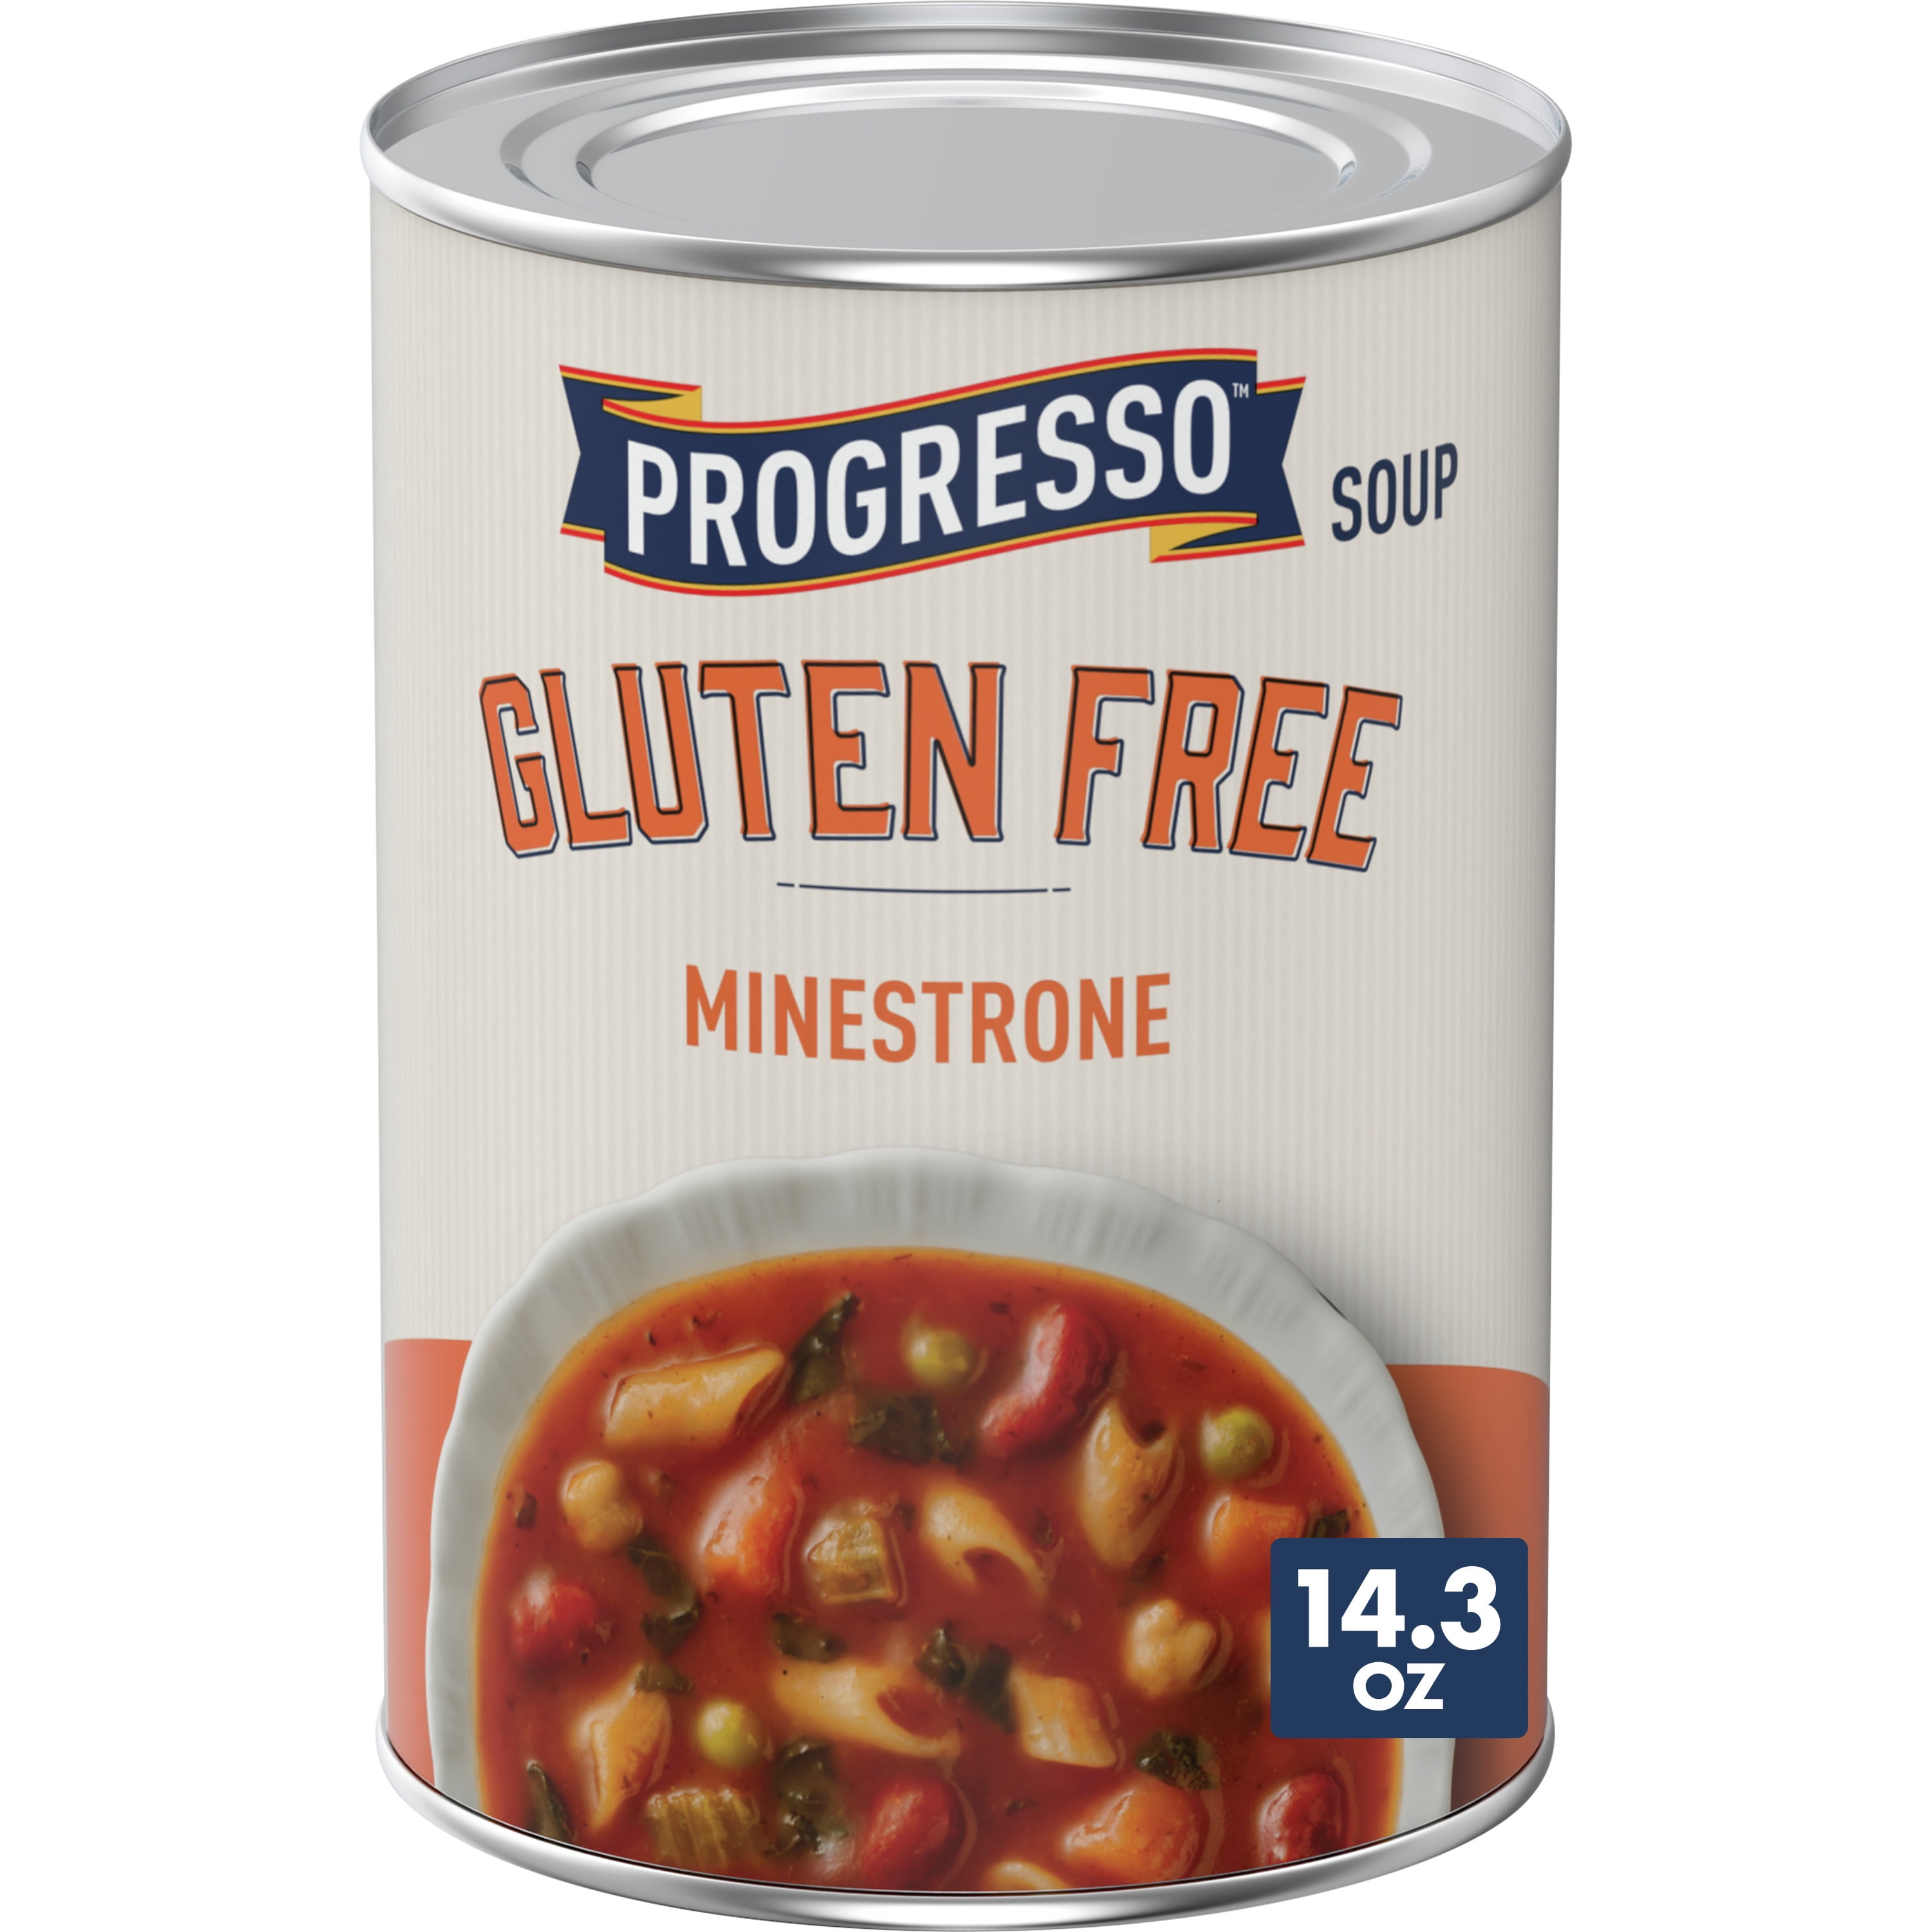 Progresso Gluten Free, Minestrone Soup, 14.3 oz - Walmart.com